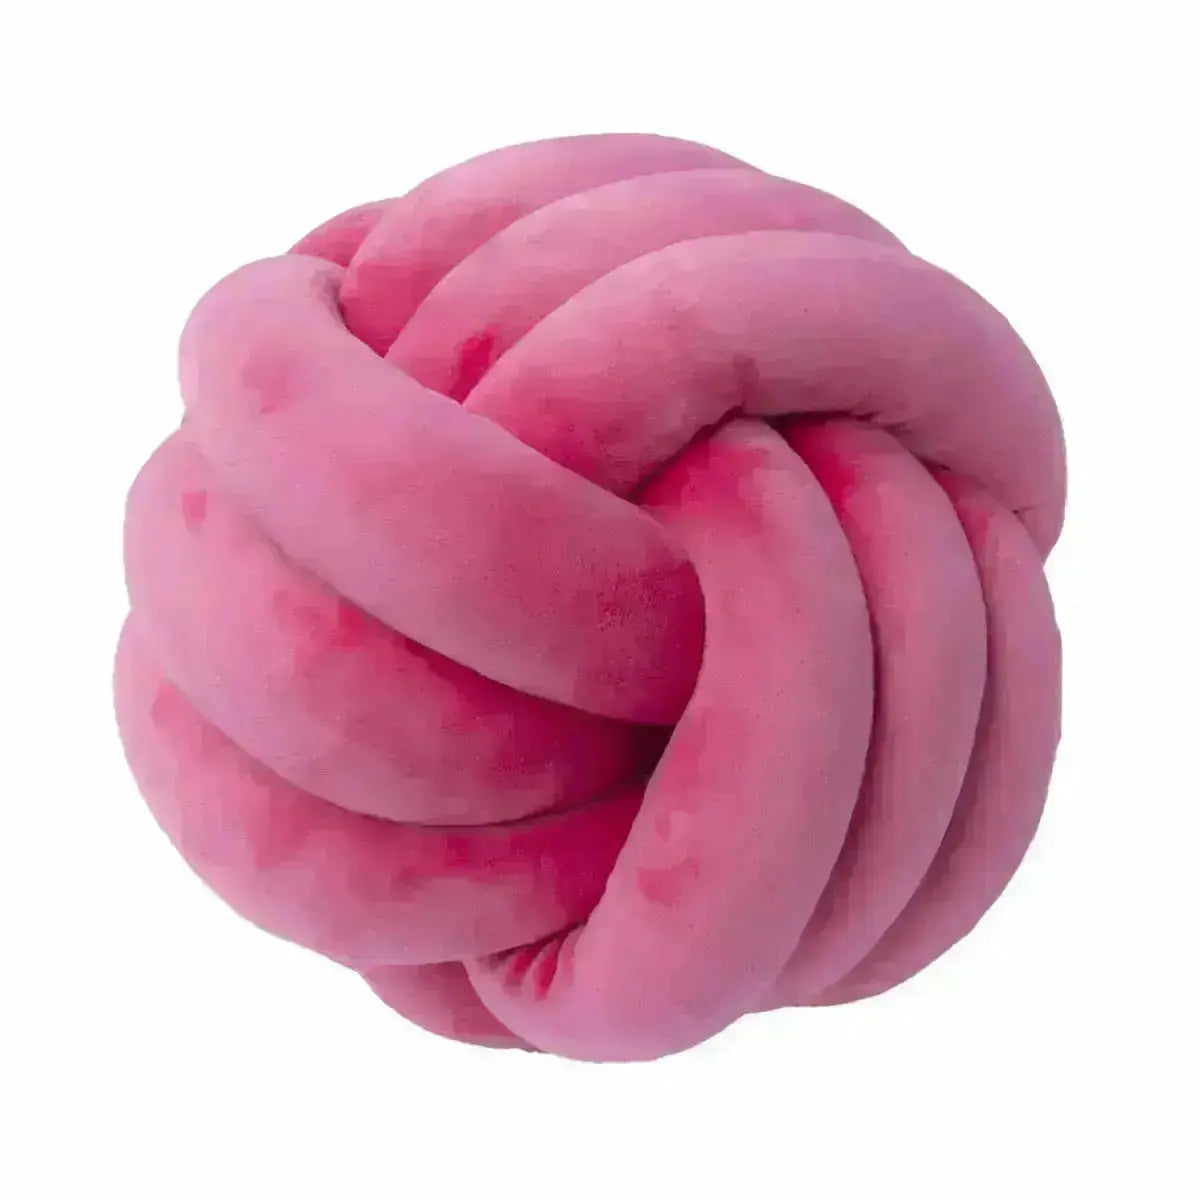 Decorative Knot Ball Pillows - HuxoHome